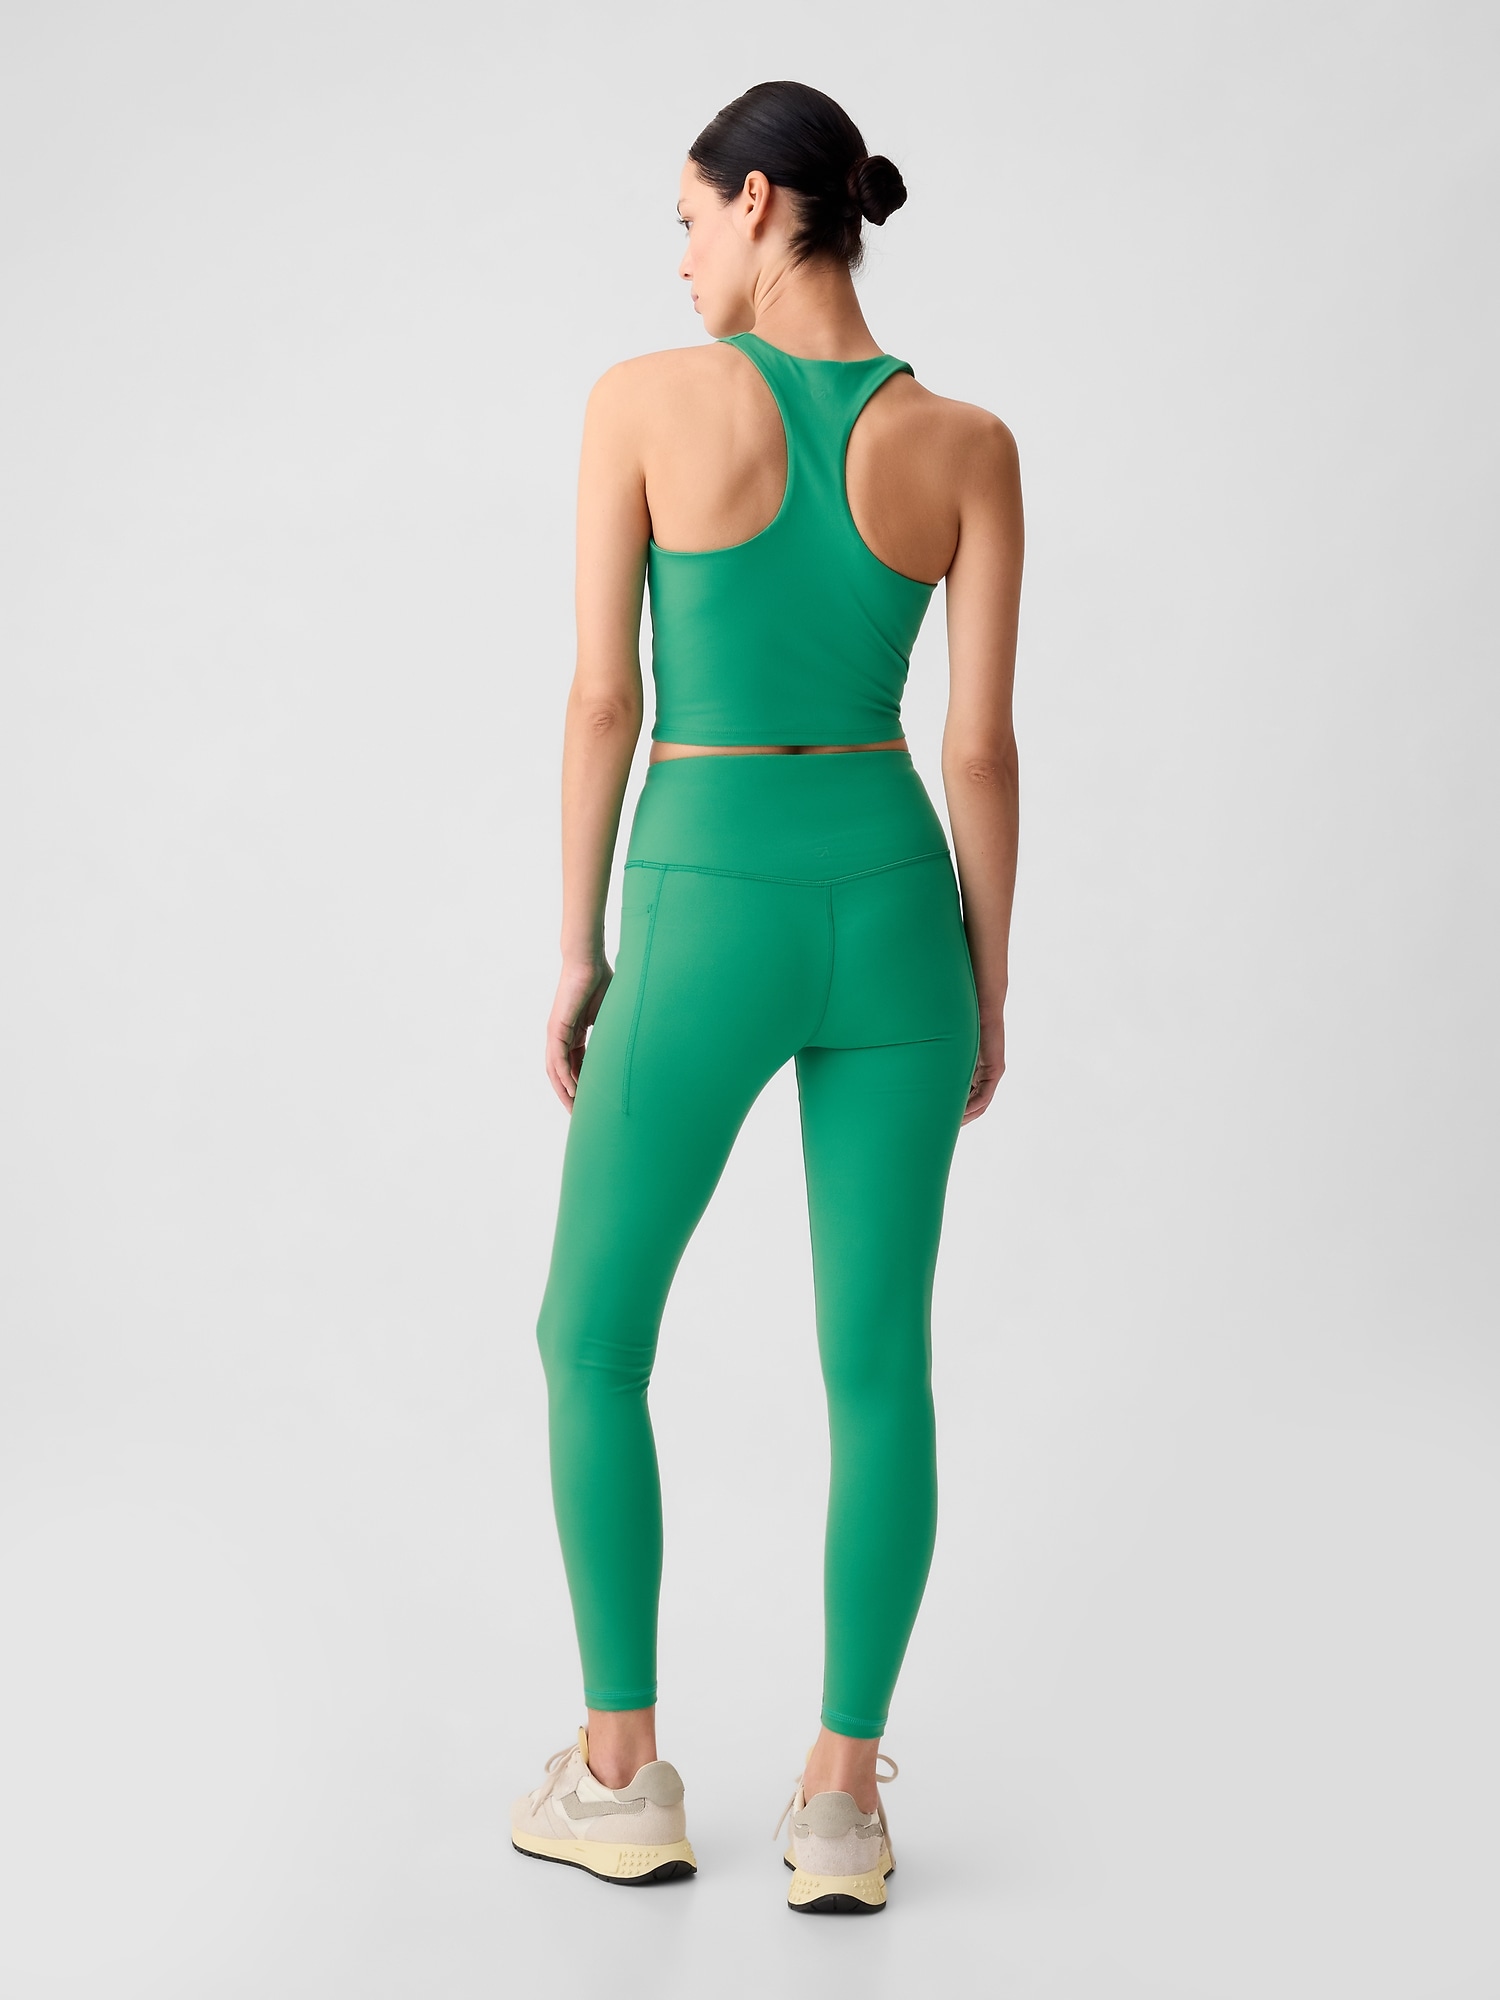 Gap Pants Size XL Women's GapFit Eclipse Leggings Crop Cropped Activewear  Yoga Athletic Multiple - $25 - From Javier